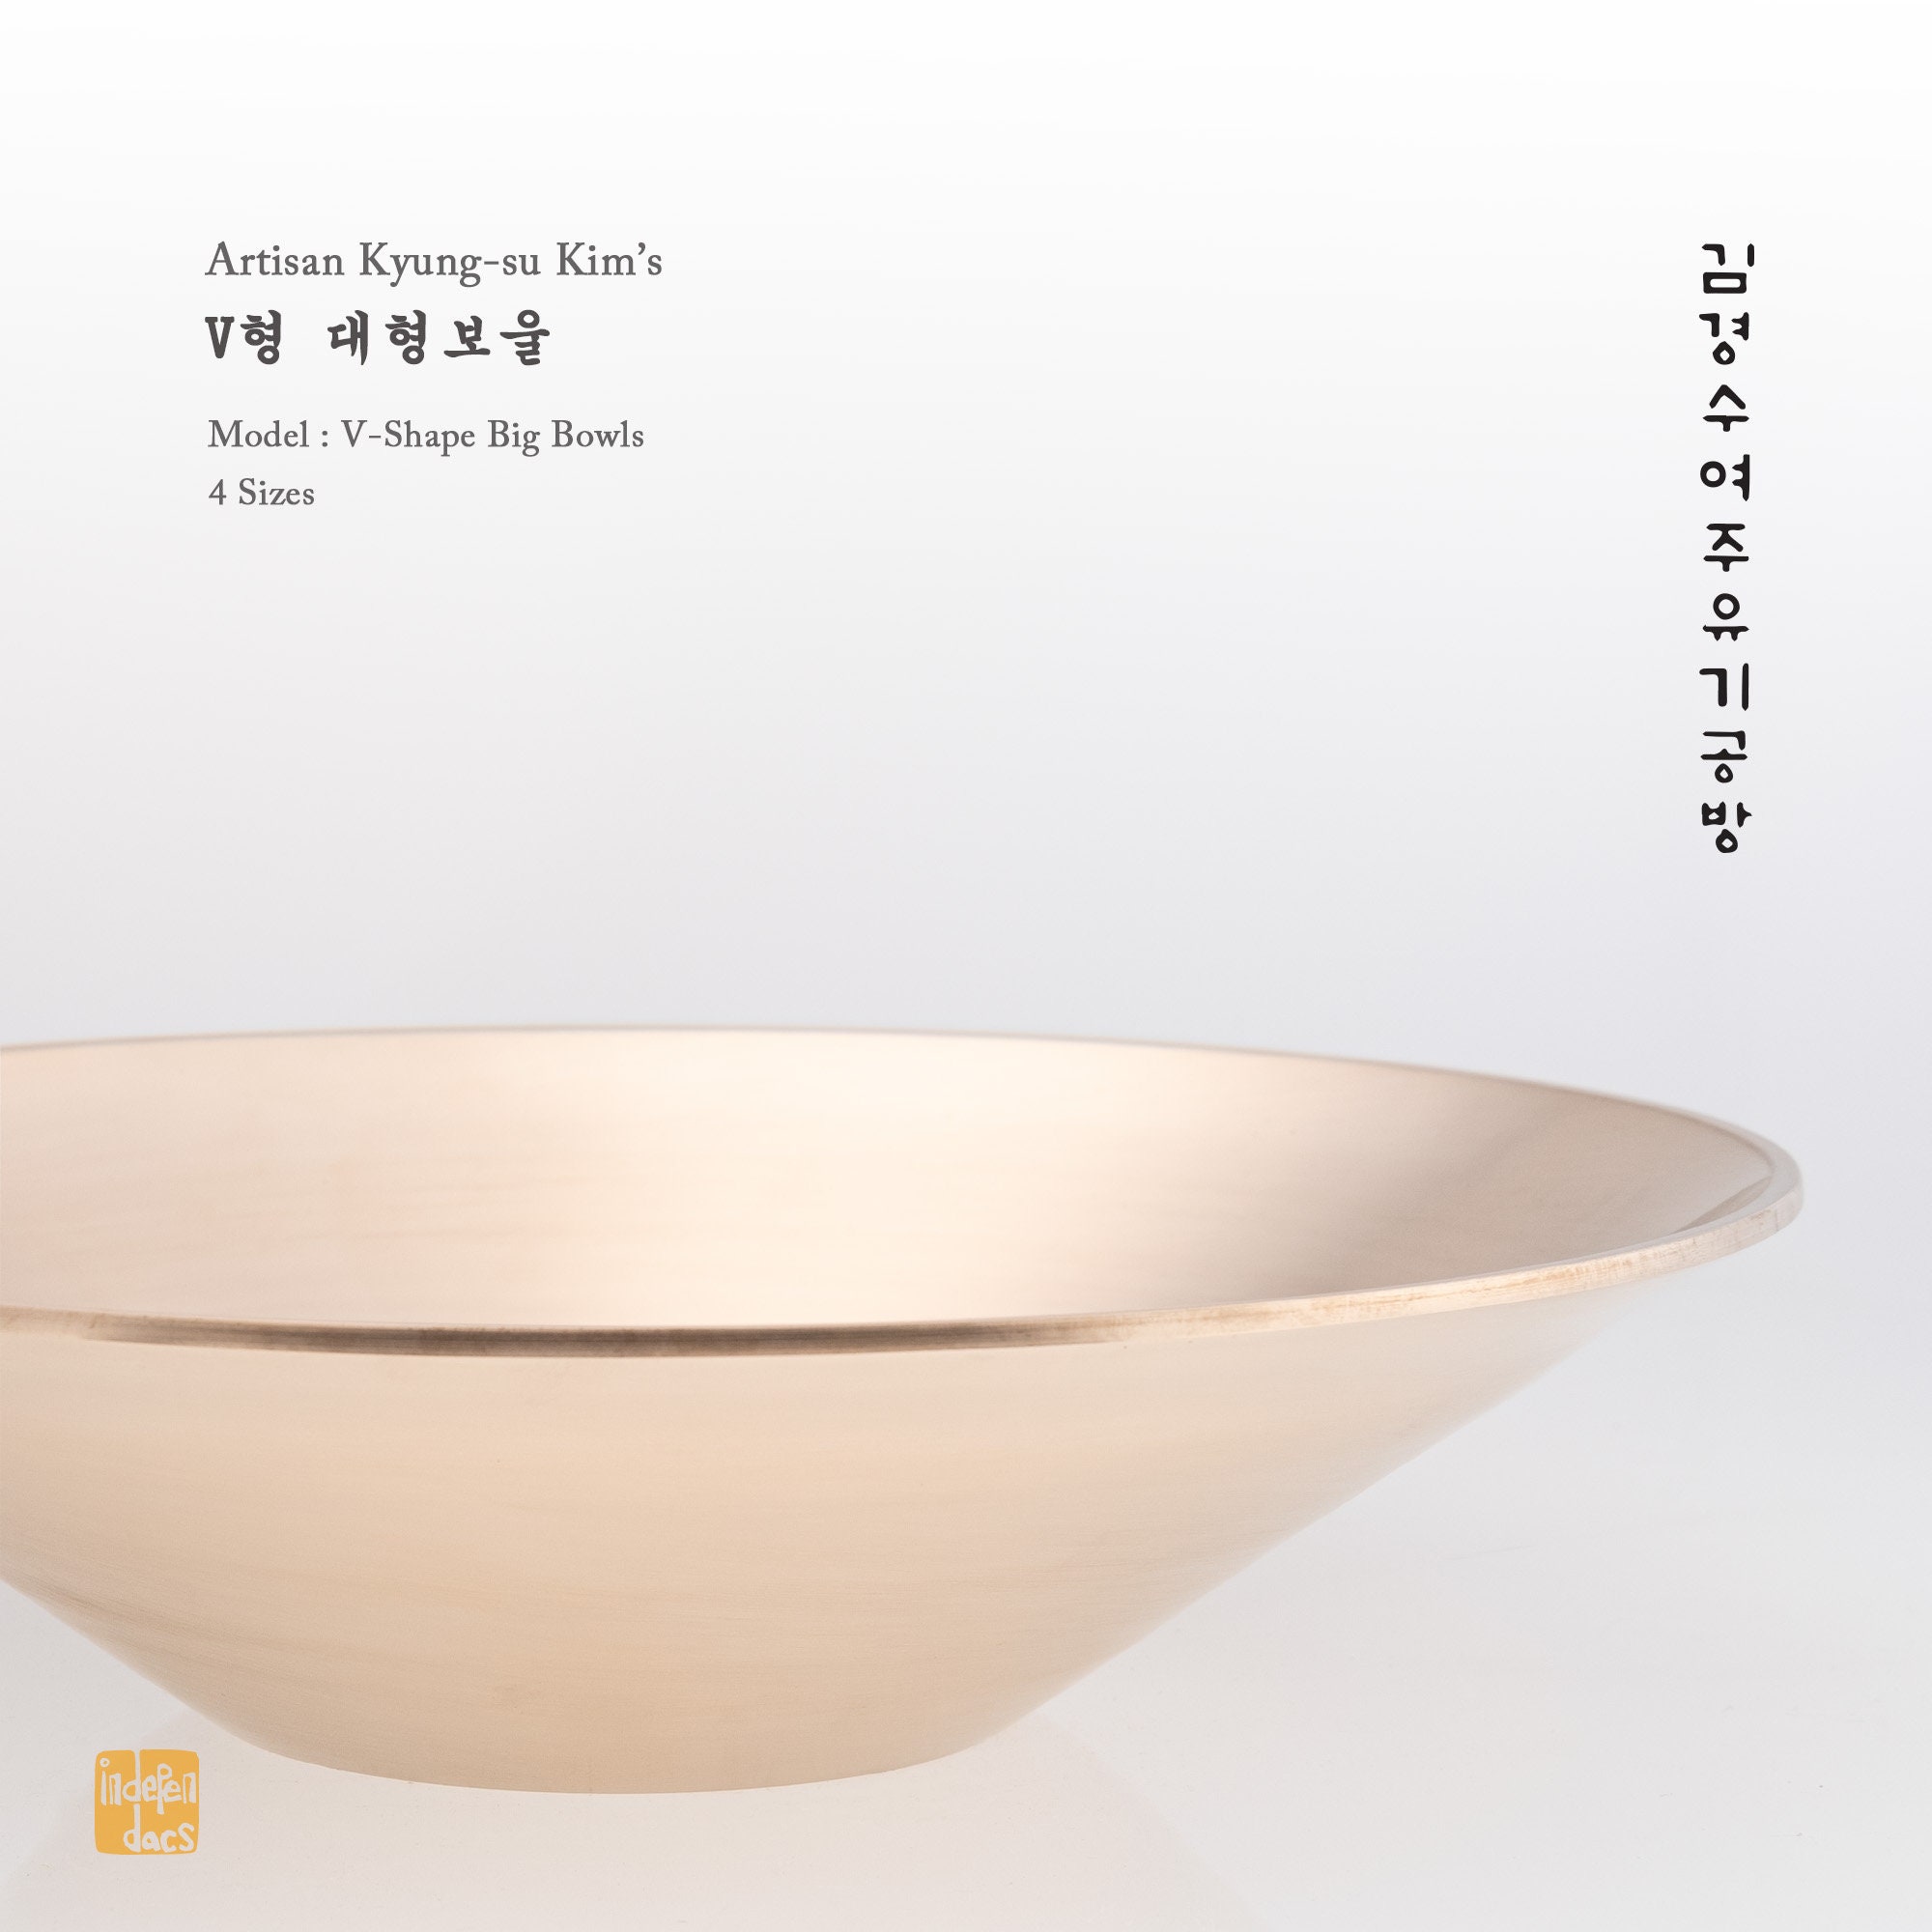 Hannot Original / Salad Bowl 223mm / Bangjja Yugi / Artisan Kyung-su Kim /  Handmade 